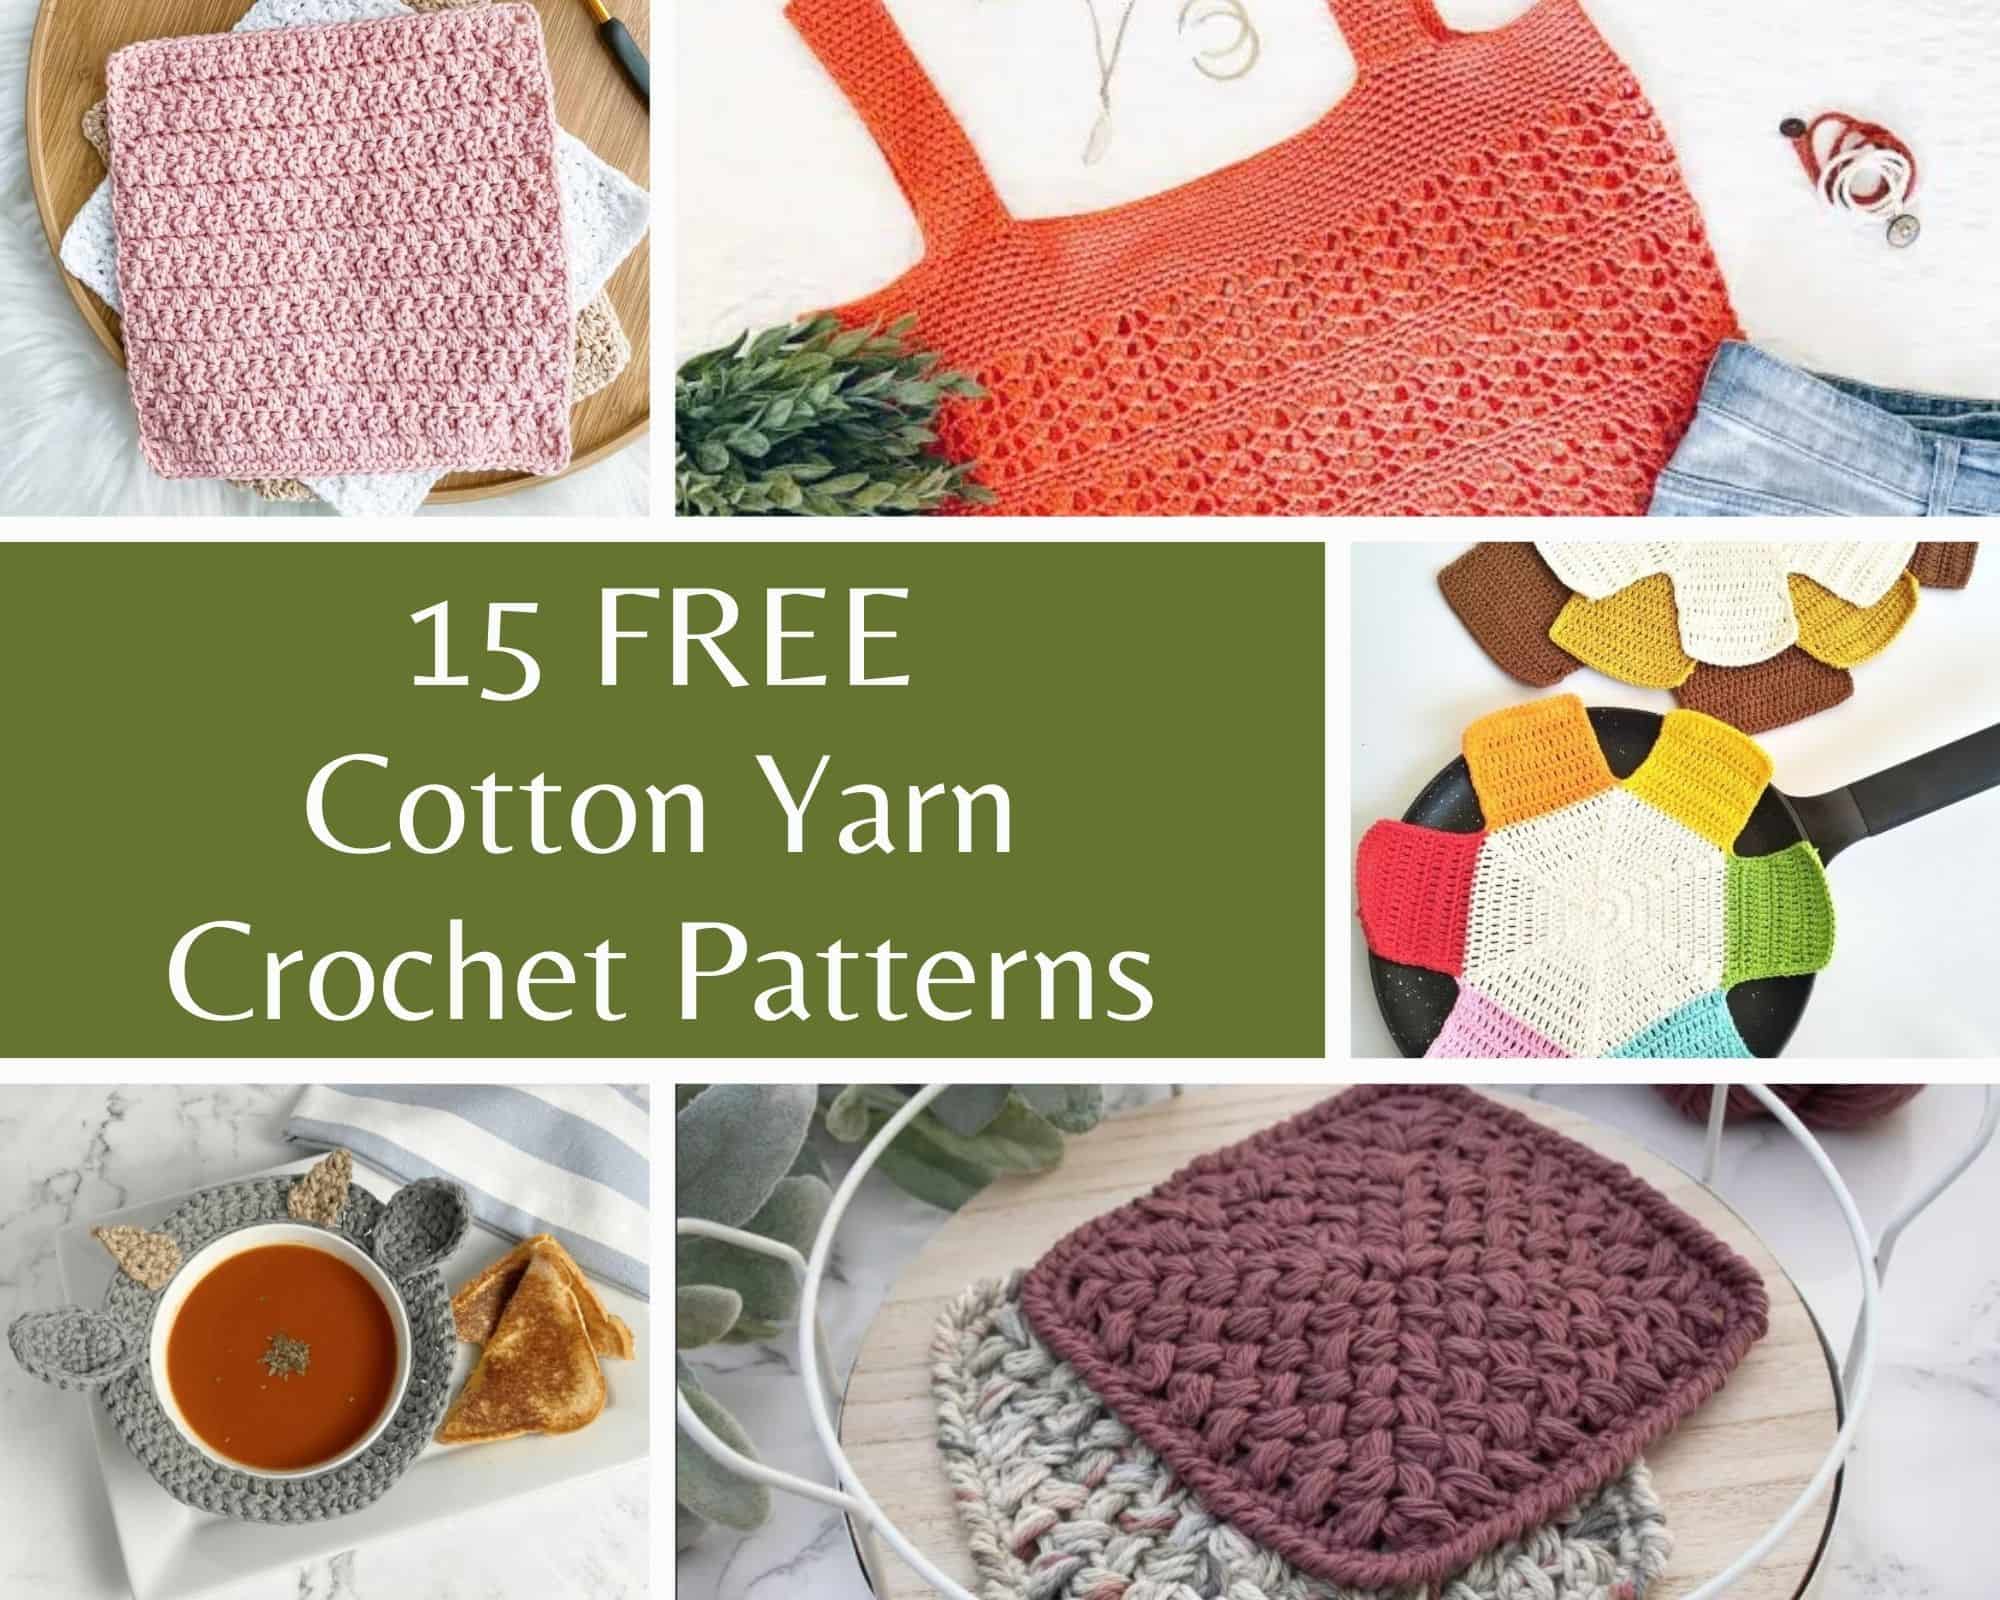 https://madebygootie.com/wp-content/uploads/2022/07/15-free-cotton-yarn-crochet-patterns-made-by-gootie-min.jpg